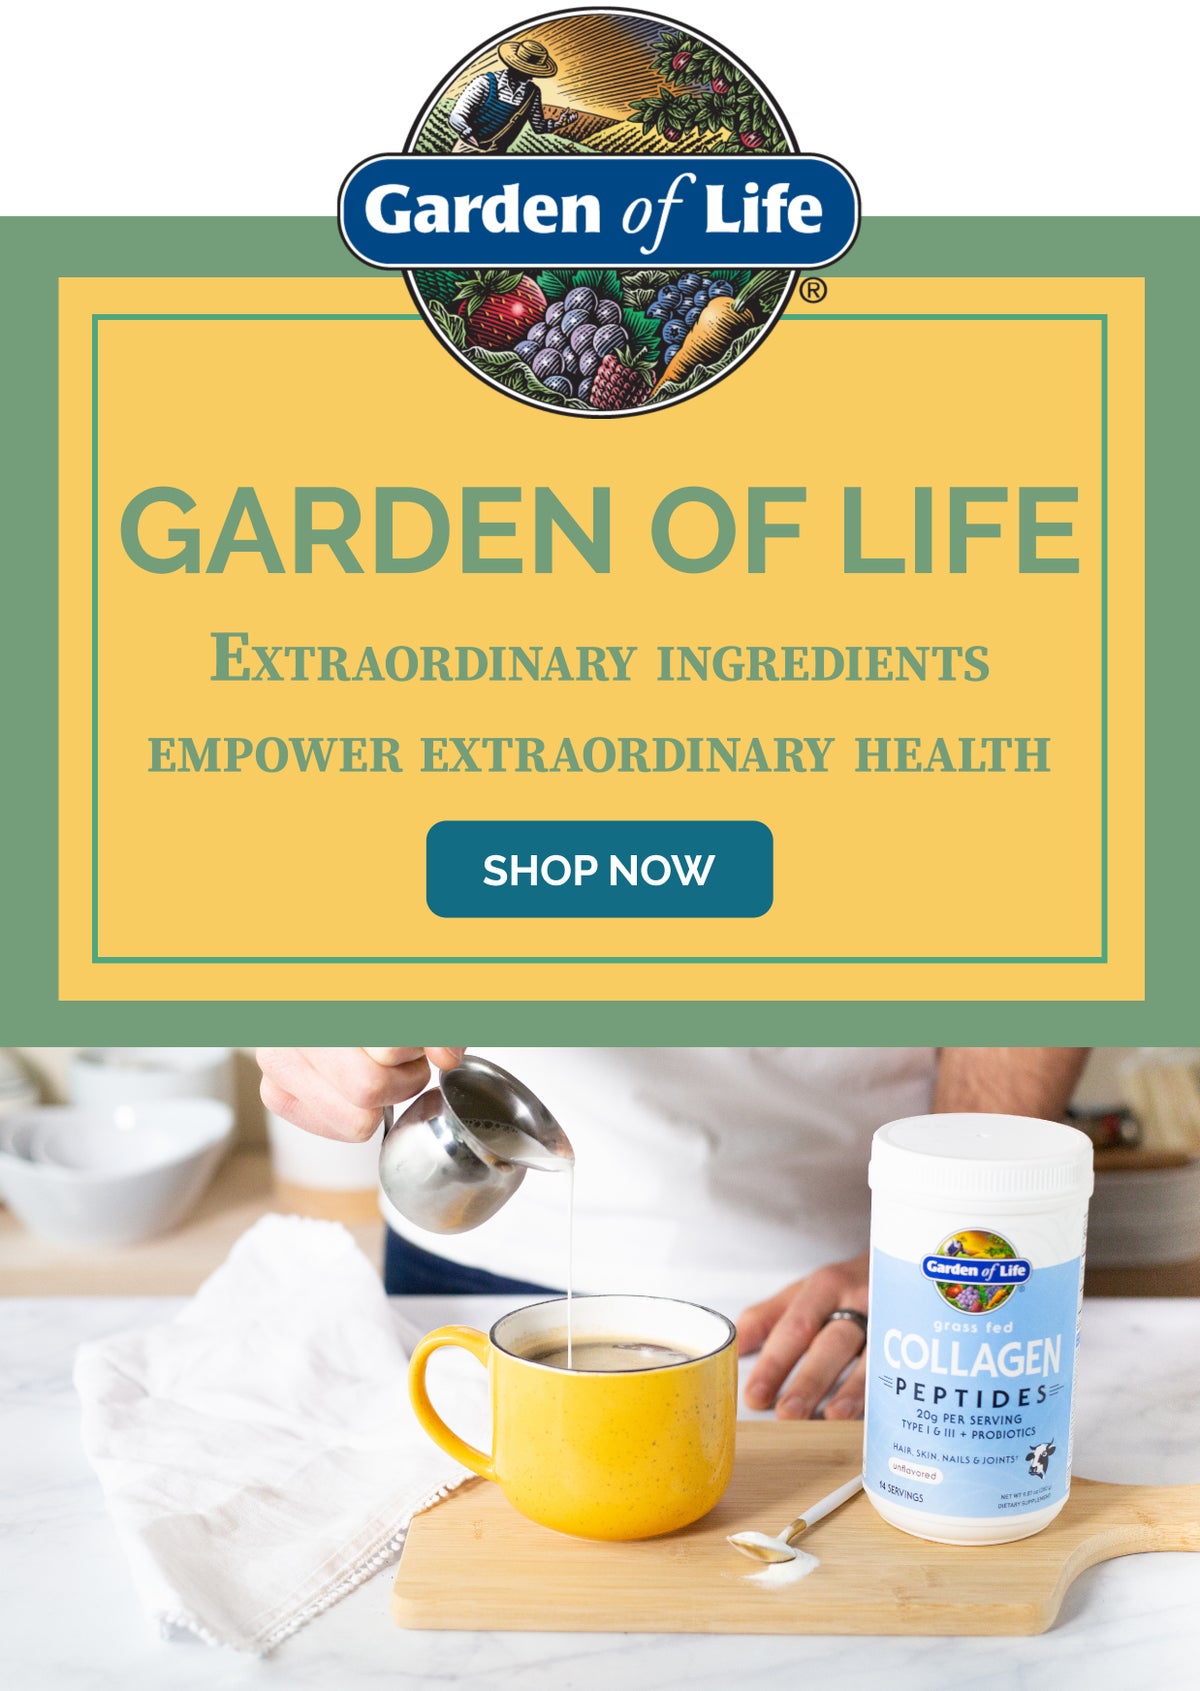 Garden of Life extraordinary ingredients empower extraordinary health